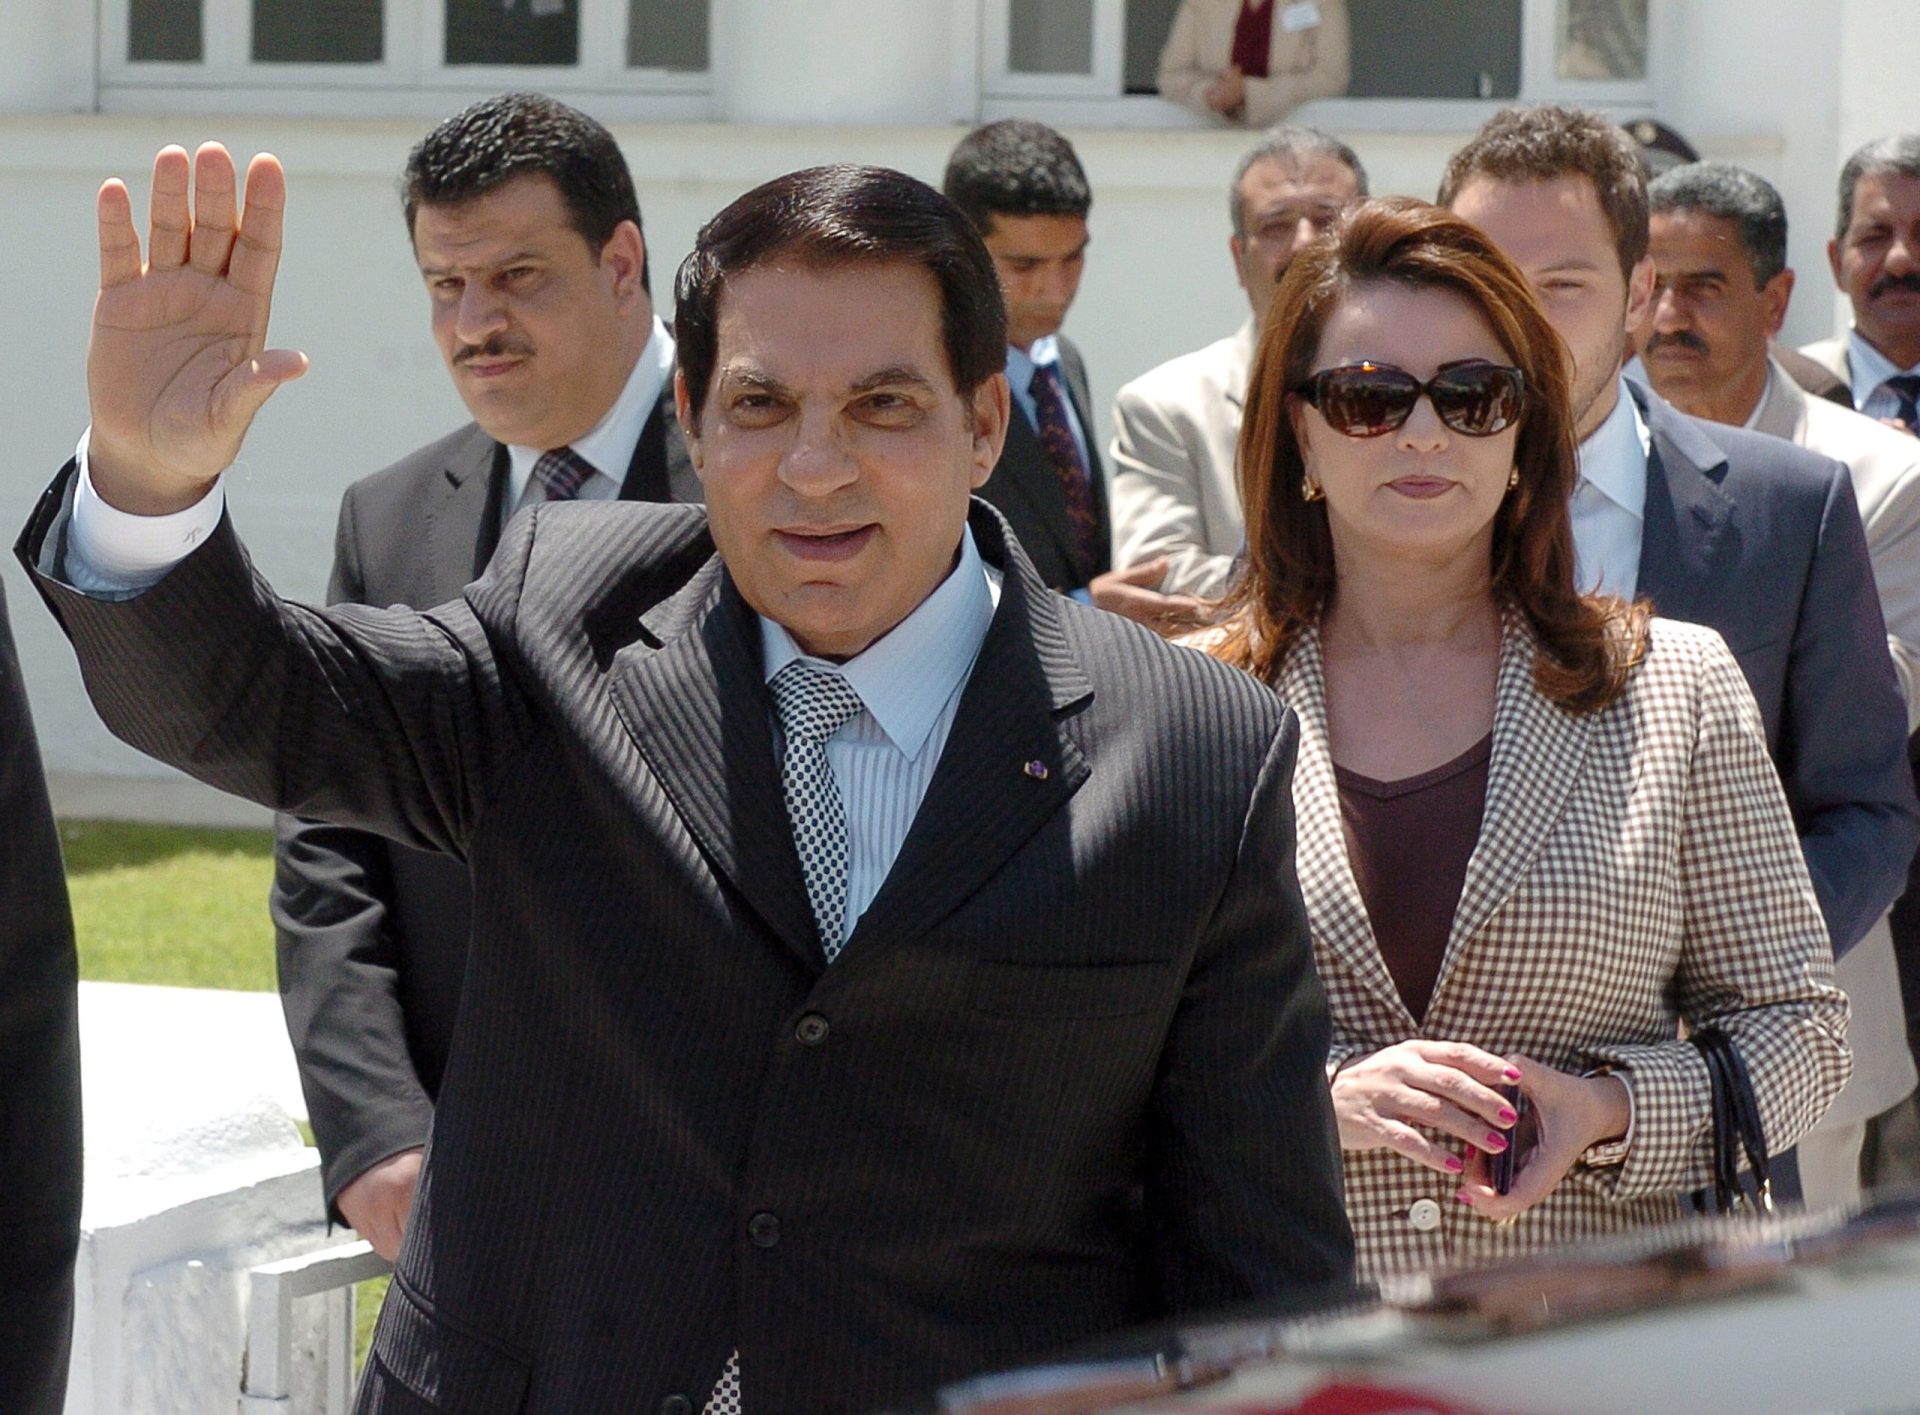 Morreu Ben Ali, o ex-Presidente da Tunísia derrubado pela Primavera Árabe